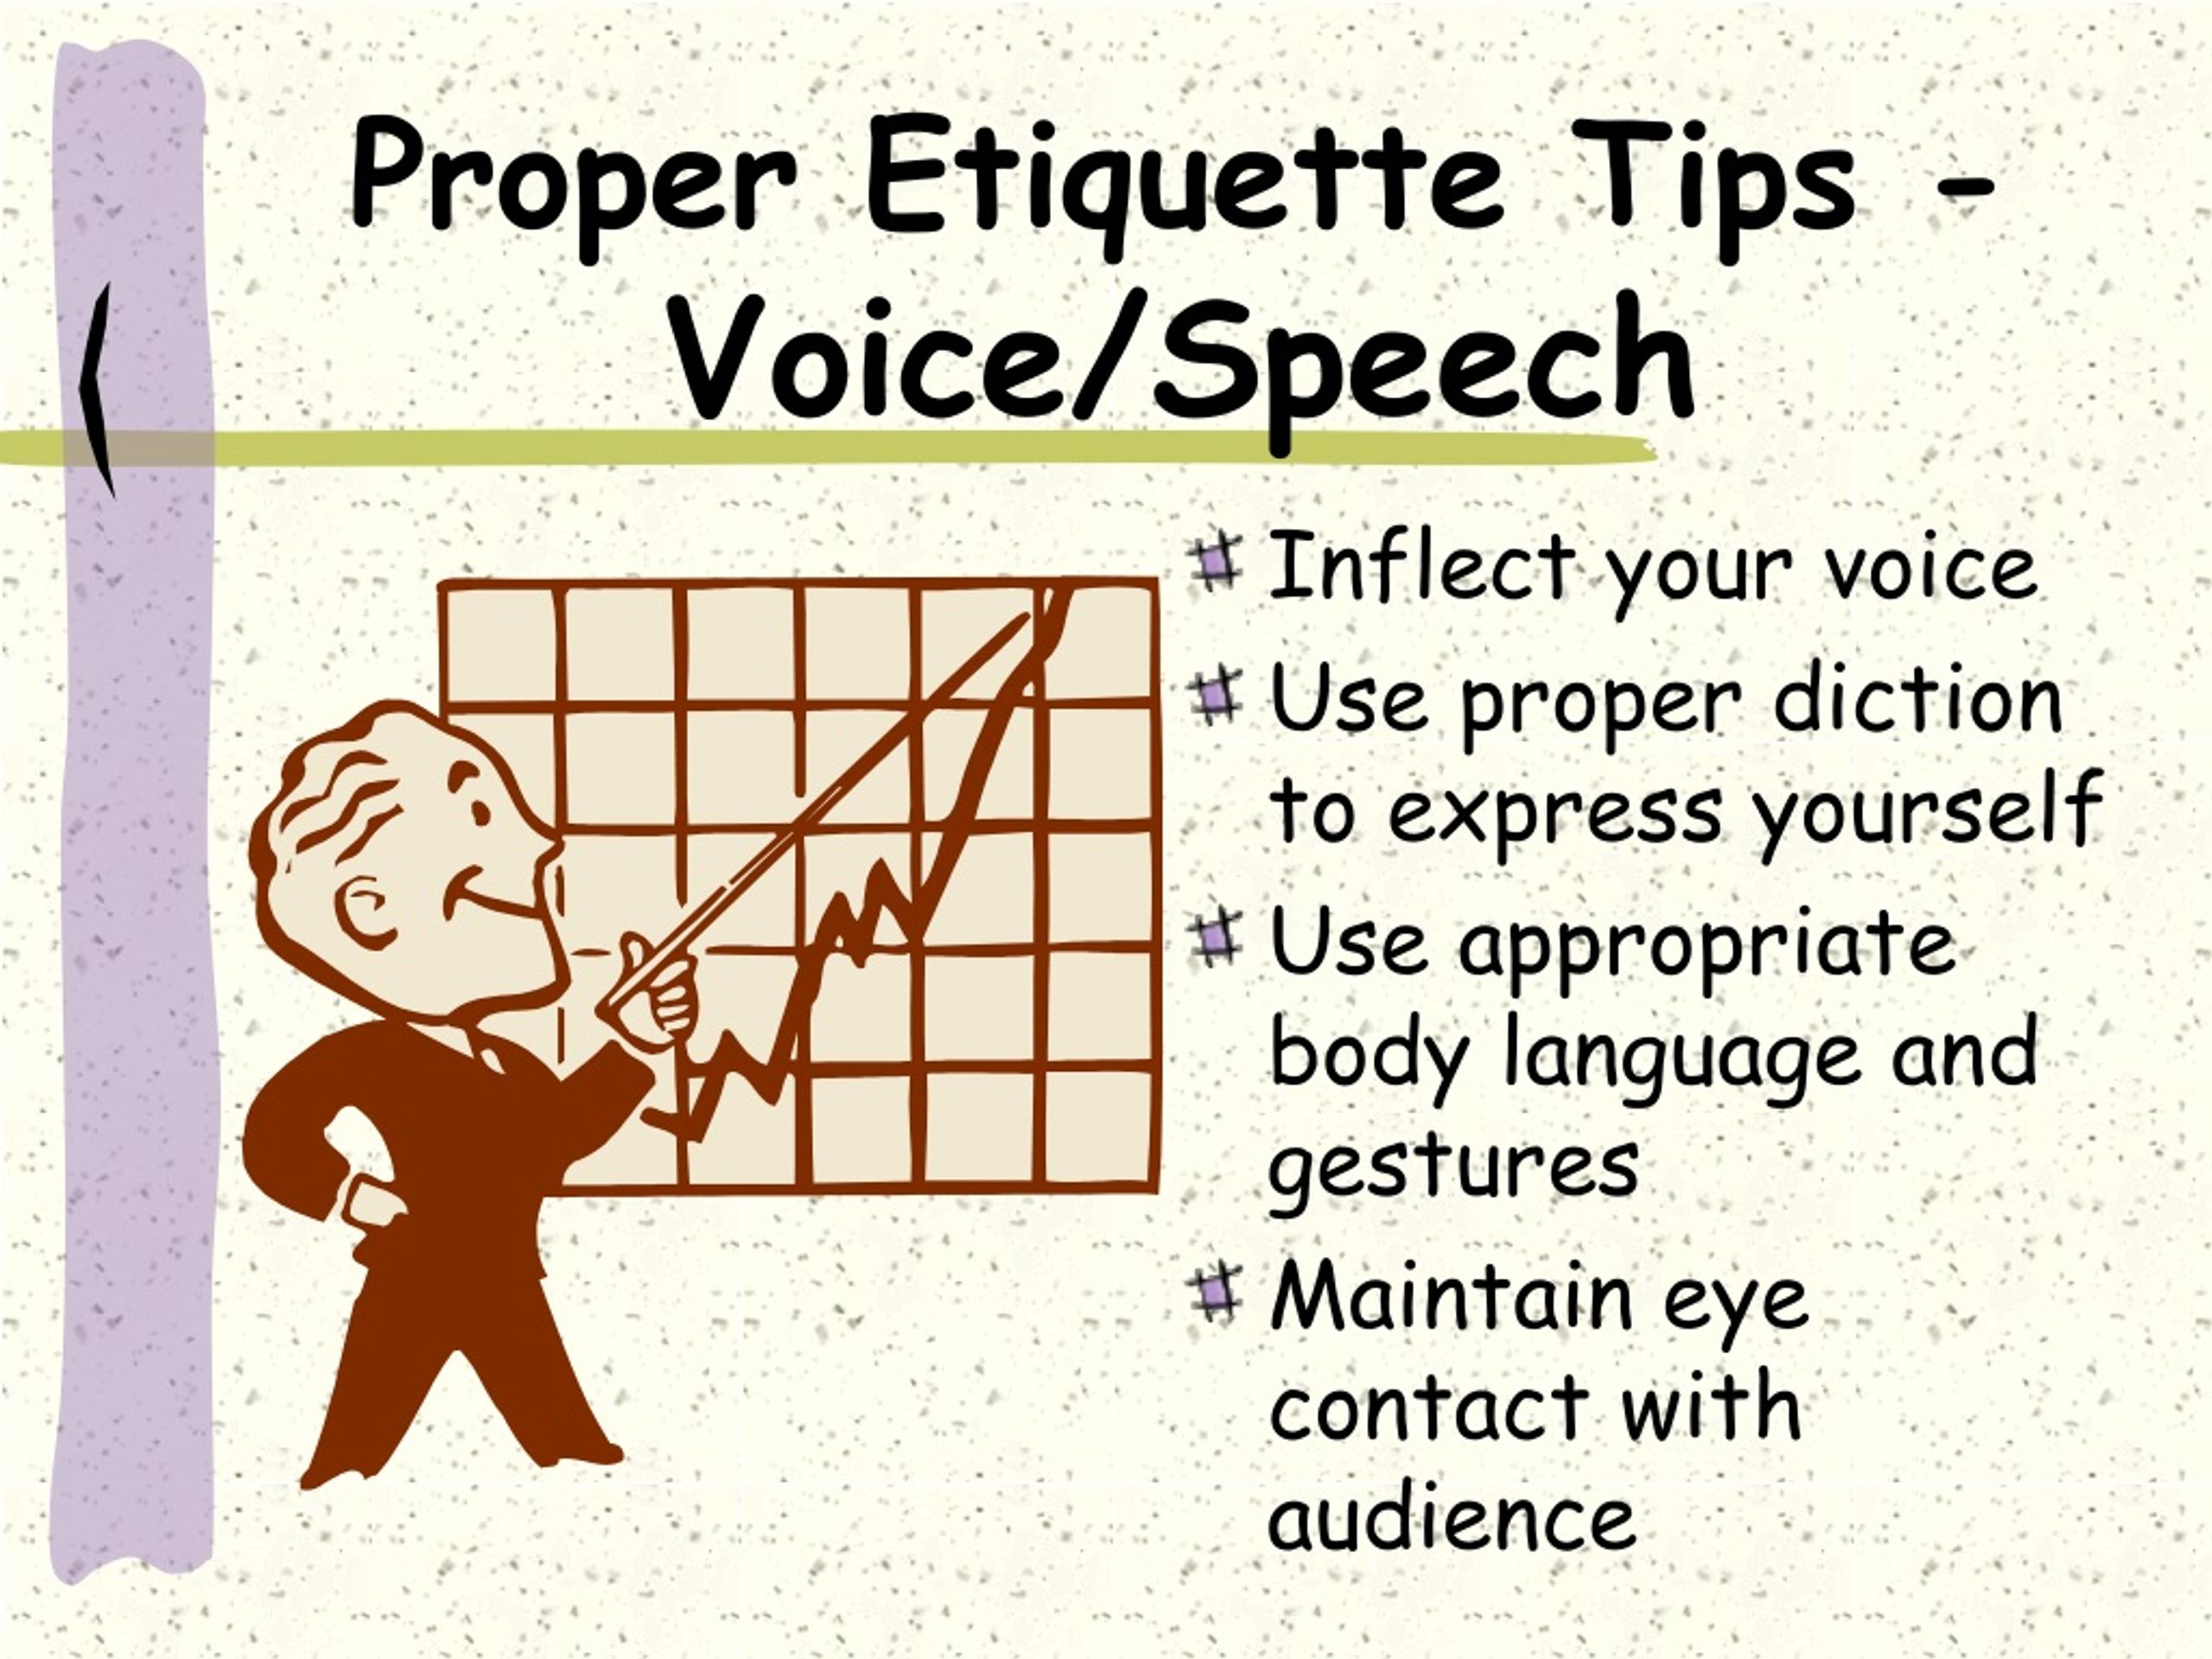 speech etiquette presentation